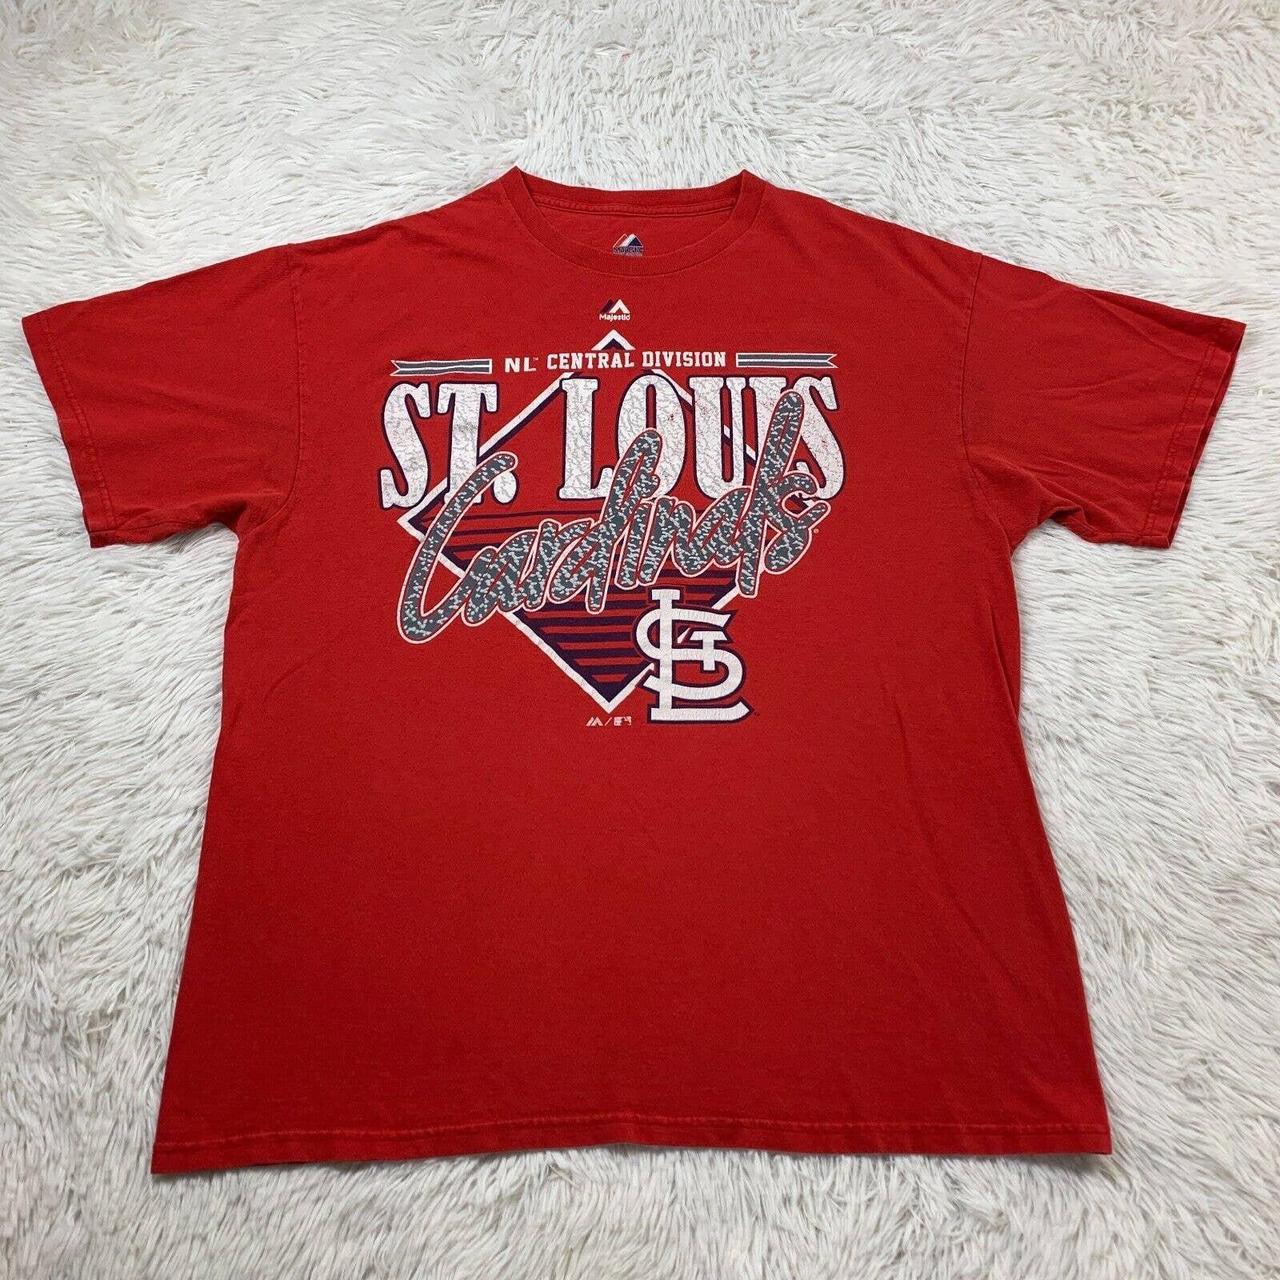 St. Louis Cardinals MLB T-Shirt by Majestic Baseball Adult Large